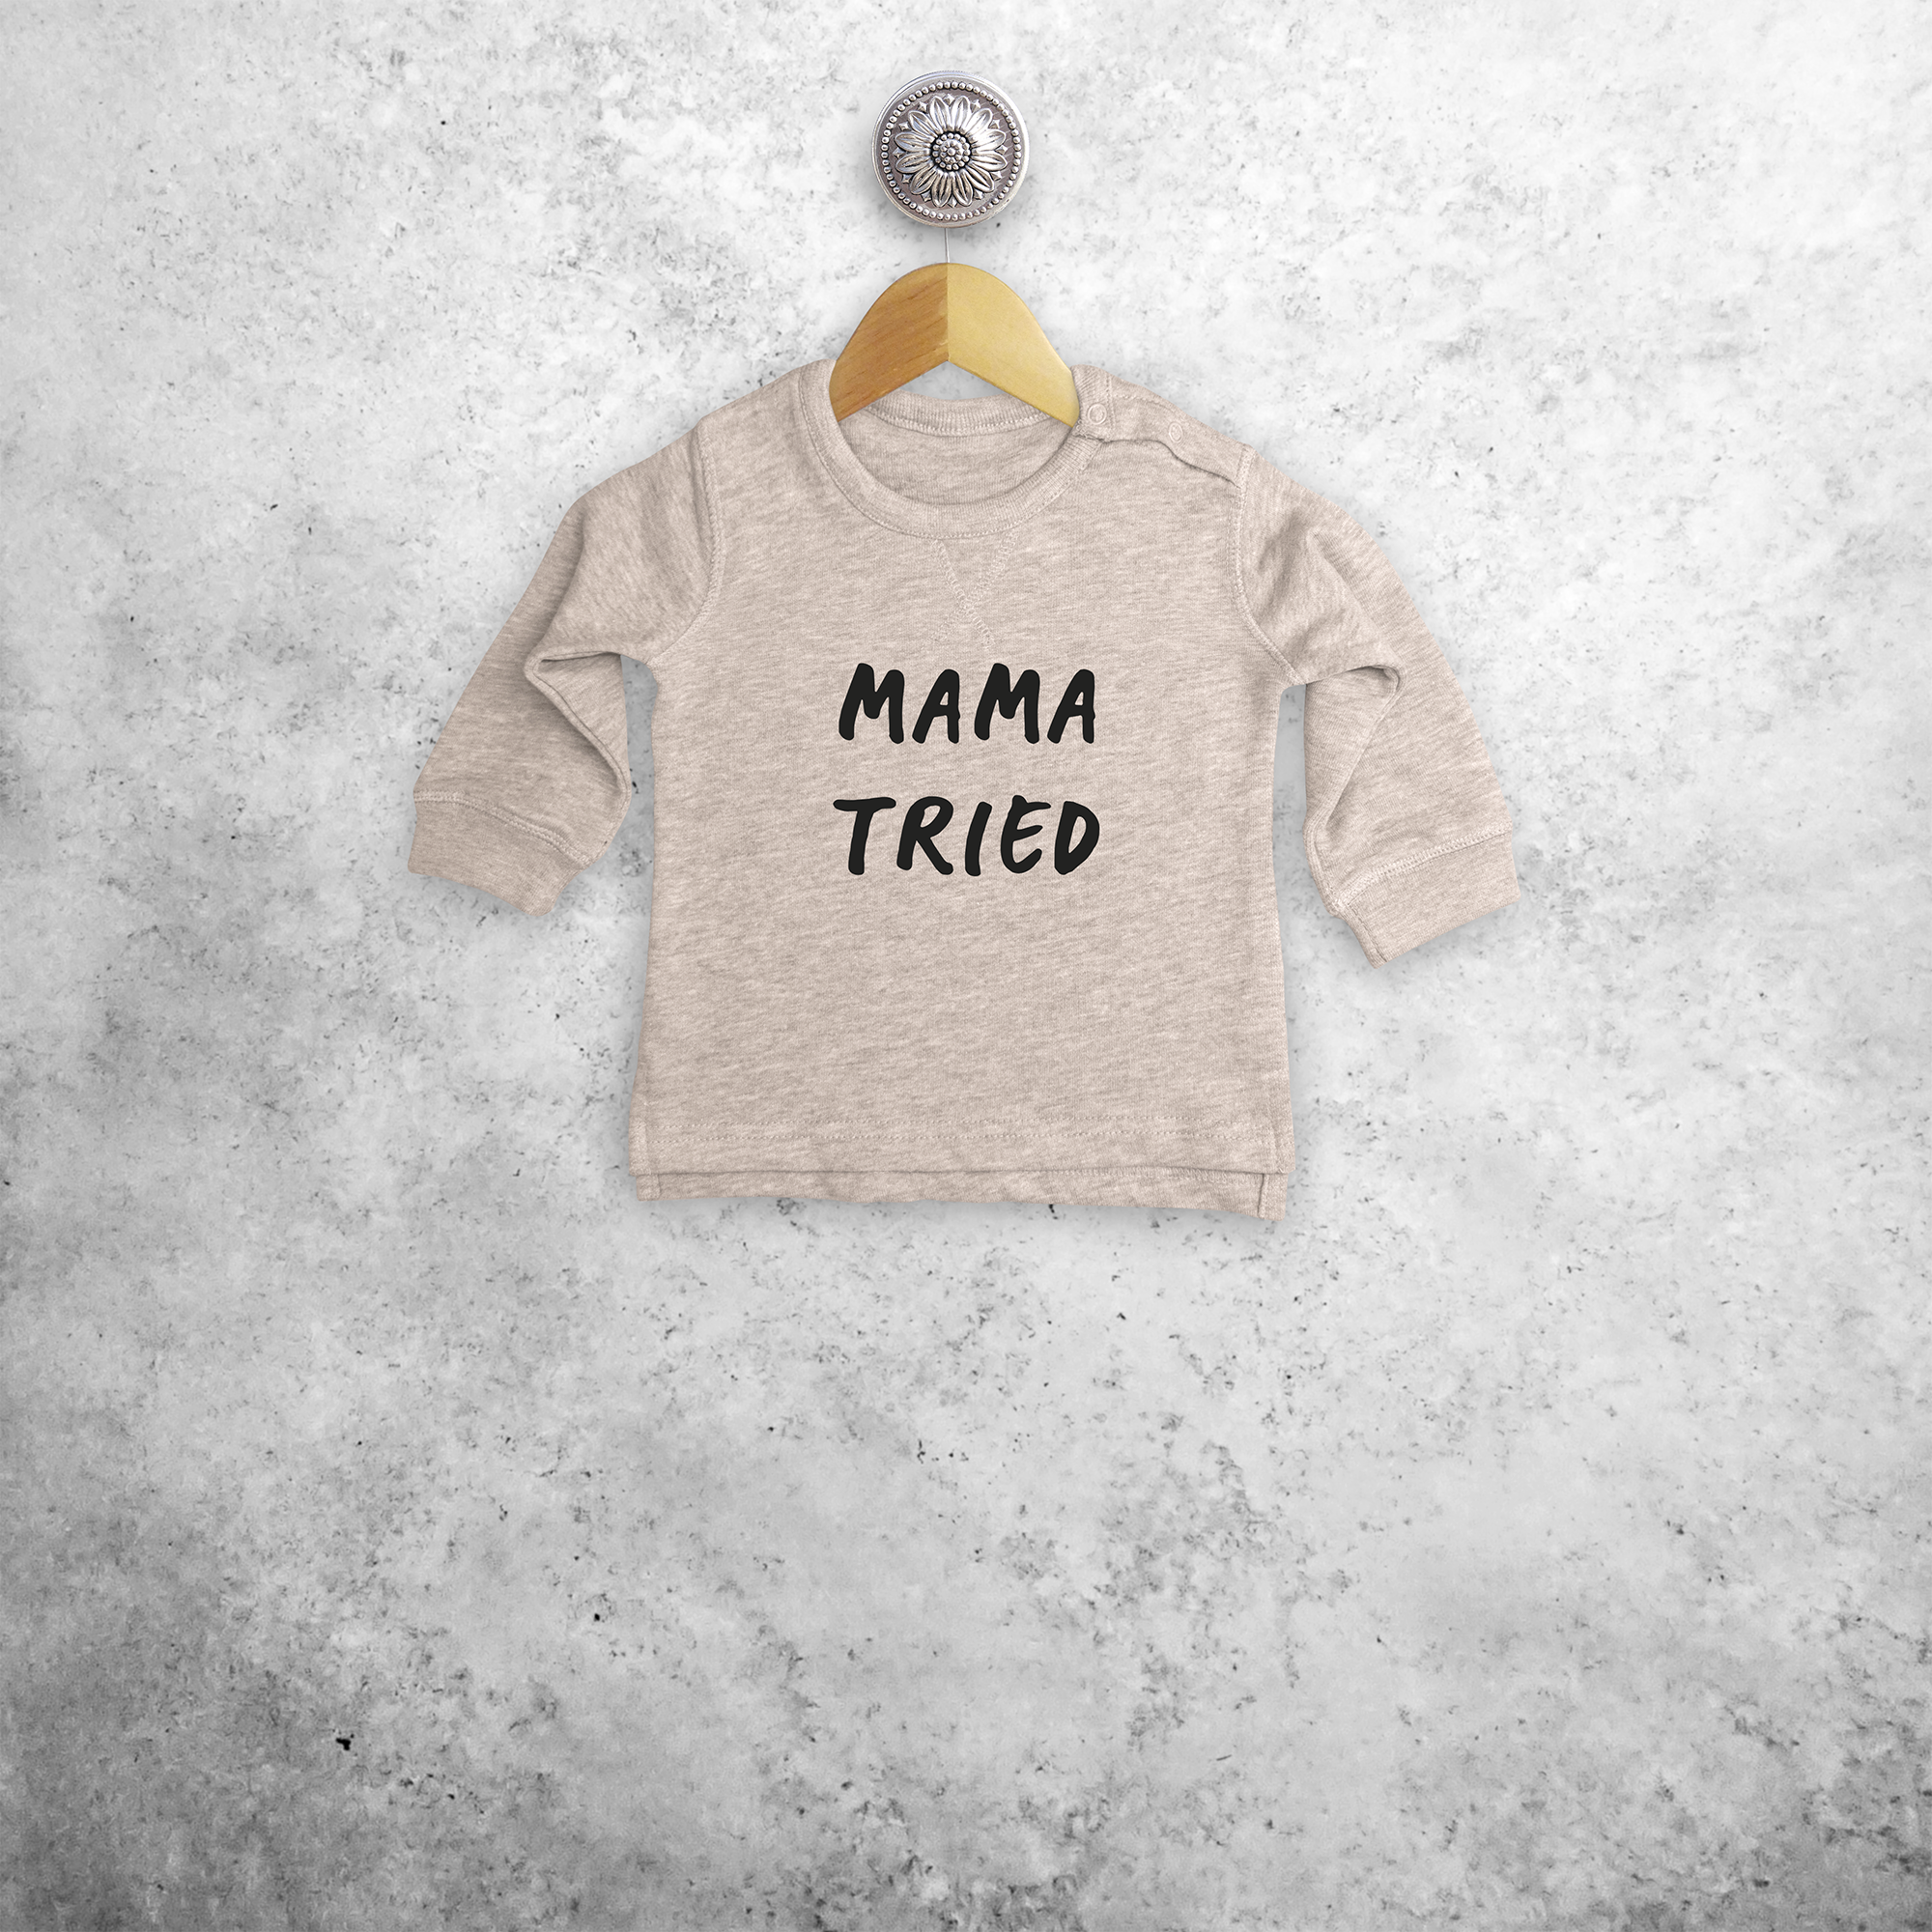 'Mama tried' baby sweater